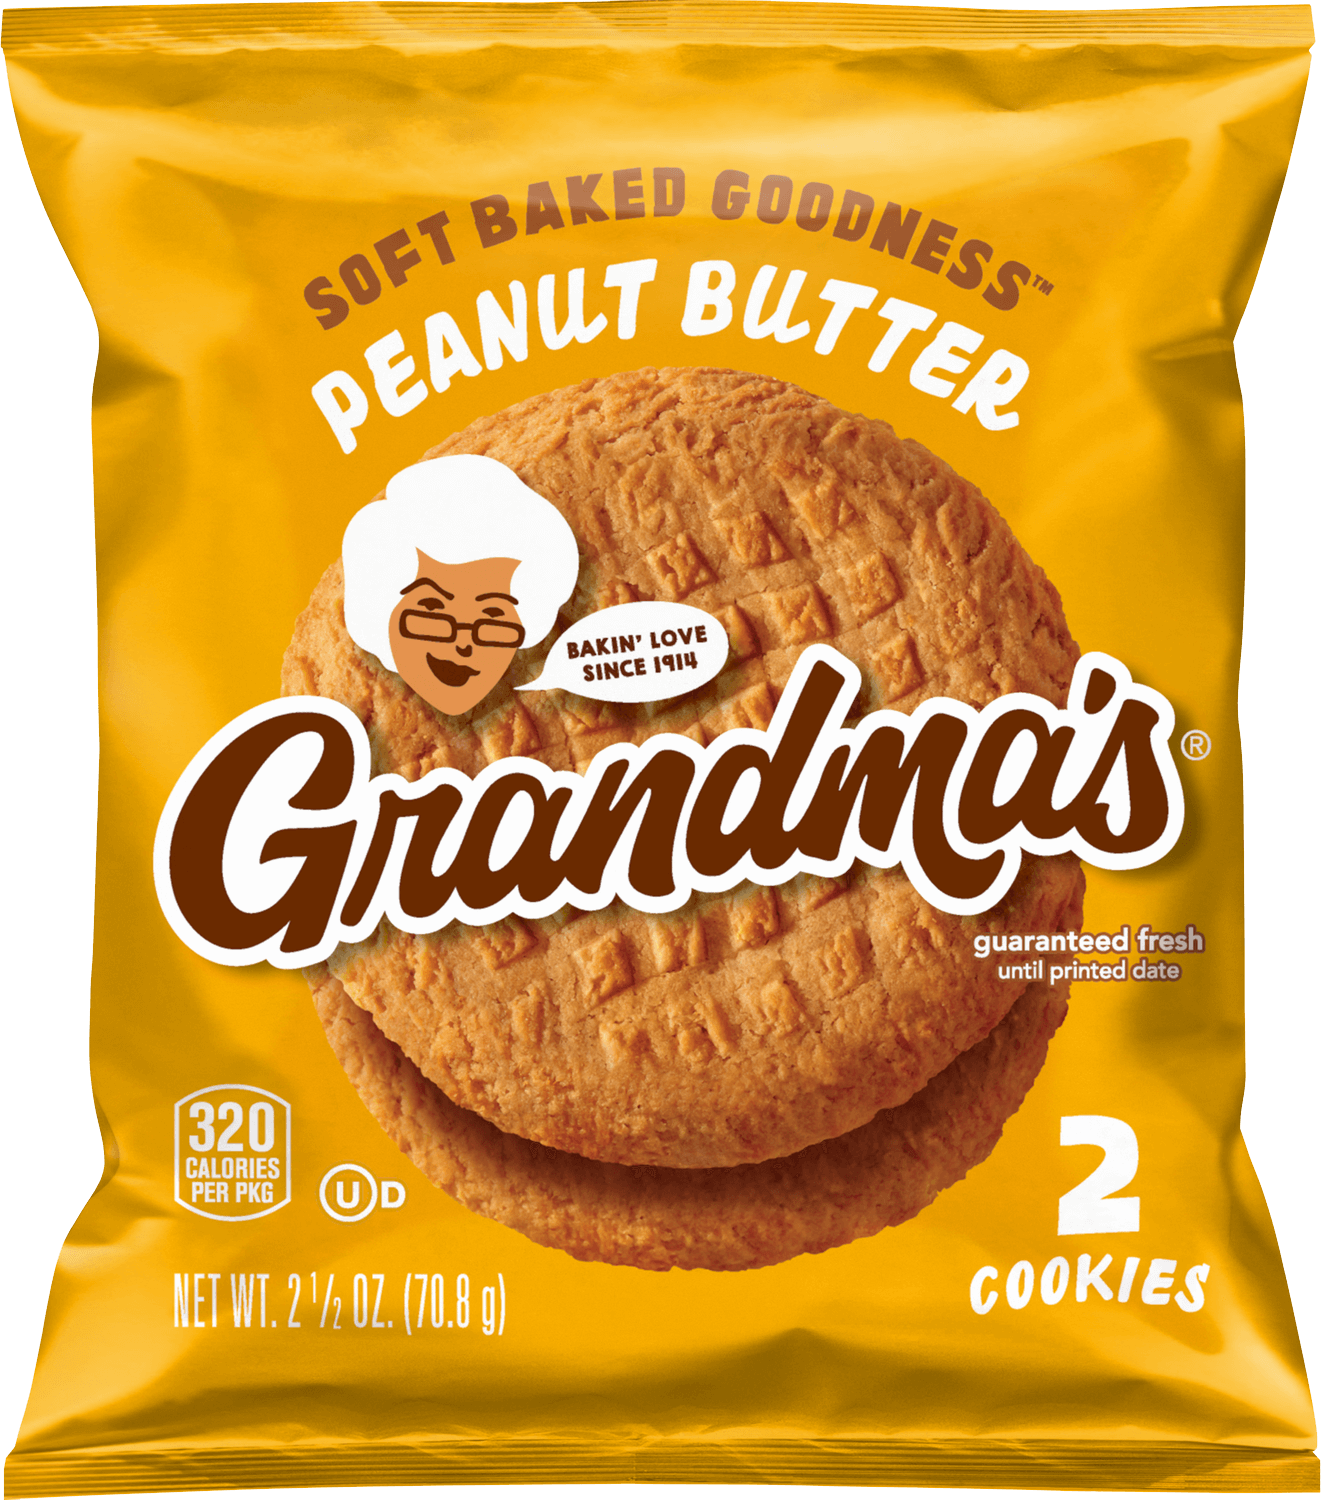 Bag of Peanut butter